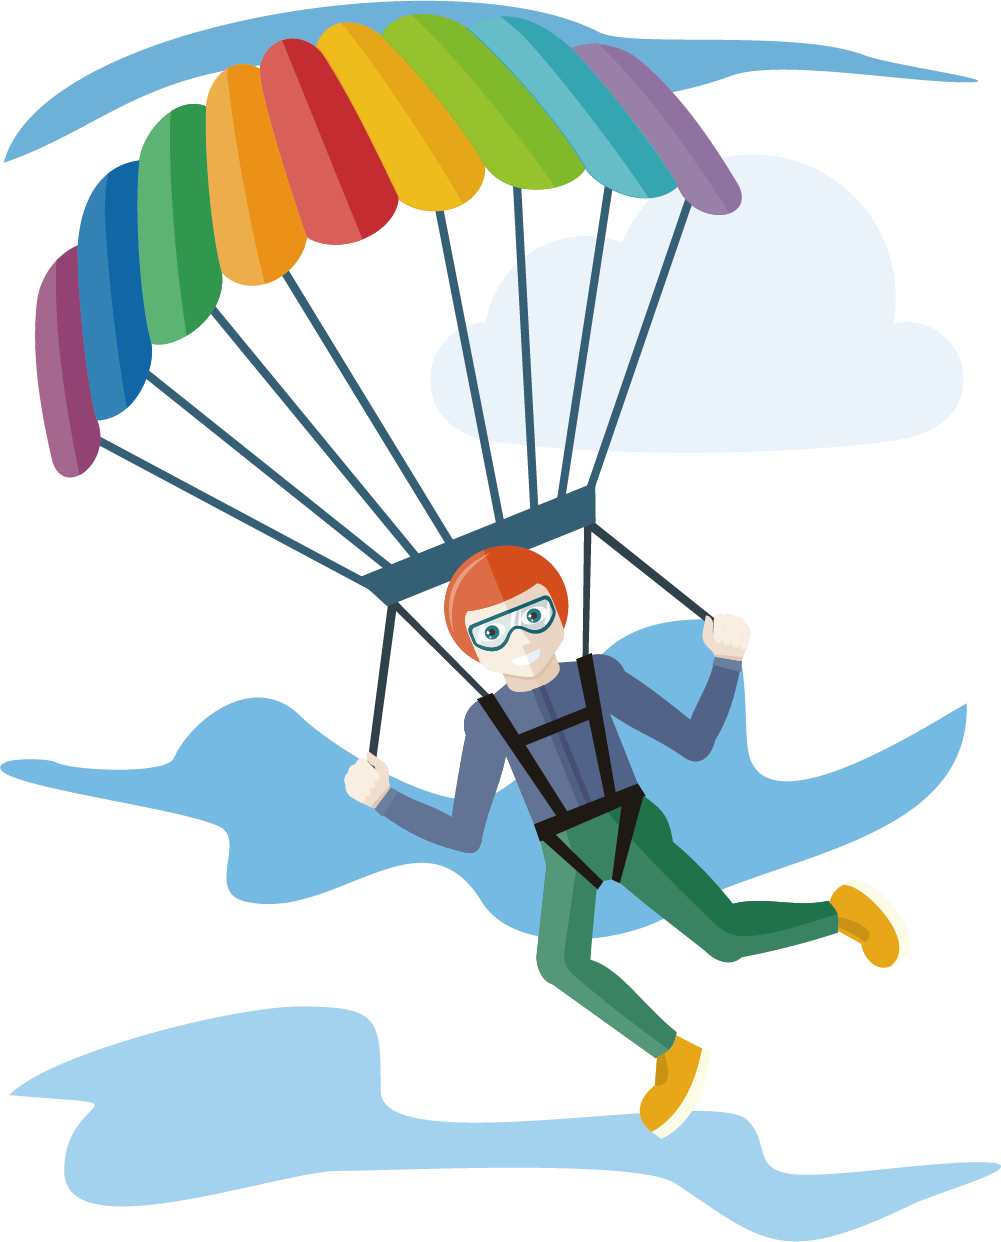 Movement clipart creative movement. Parachute parachuting clip art